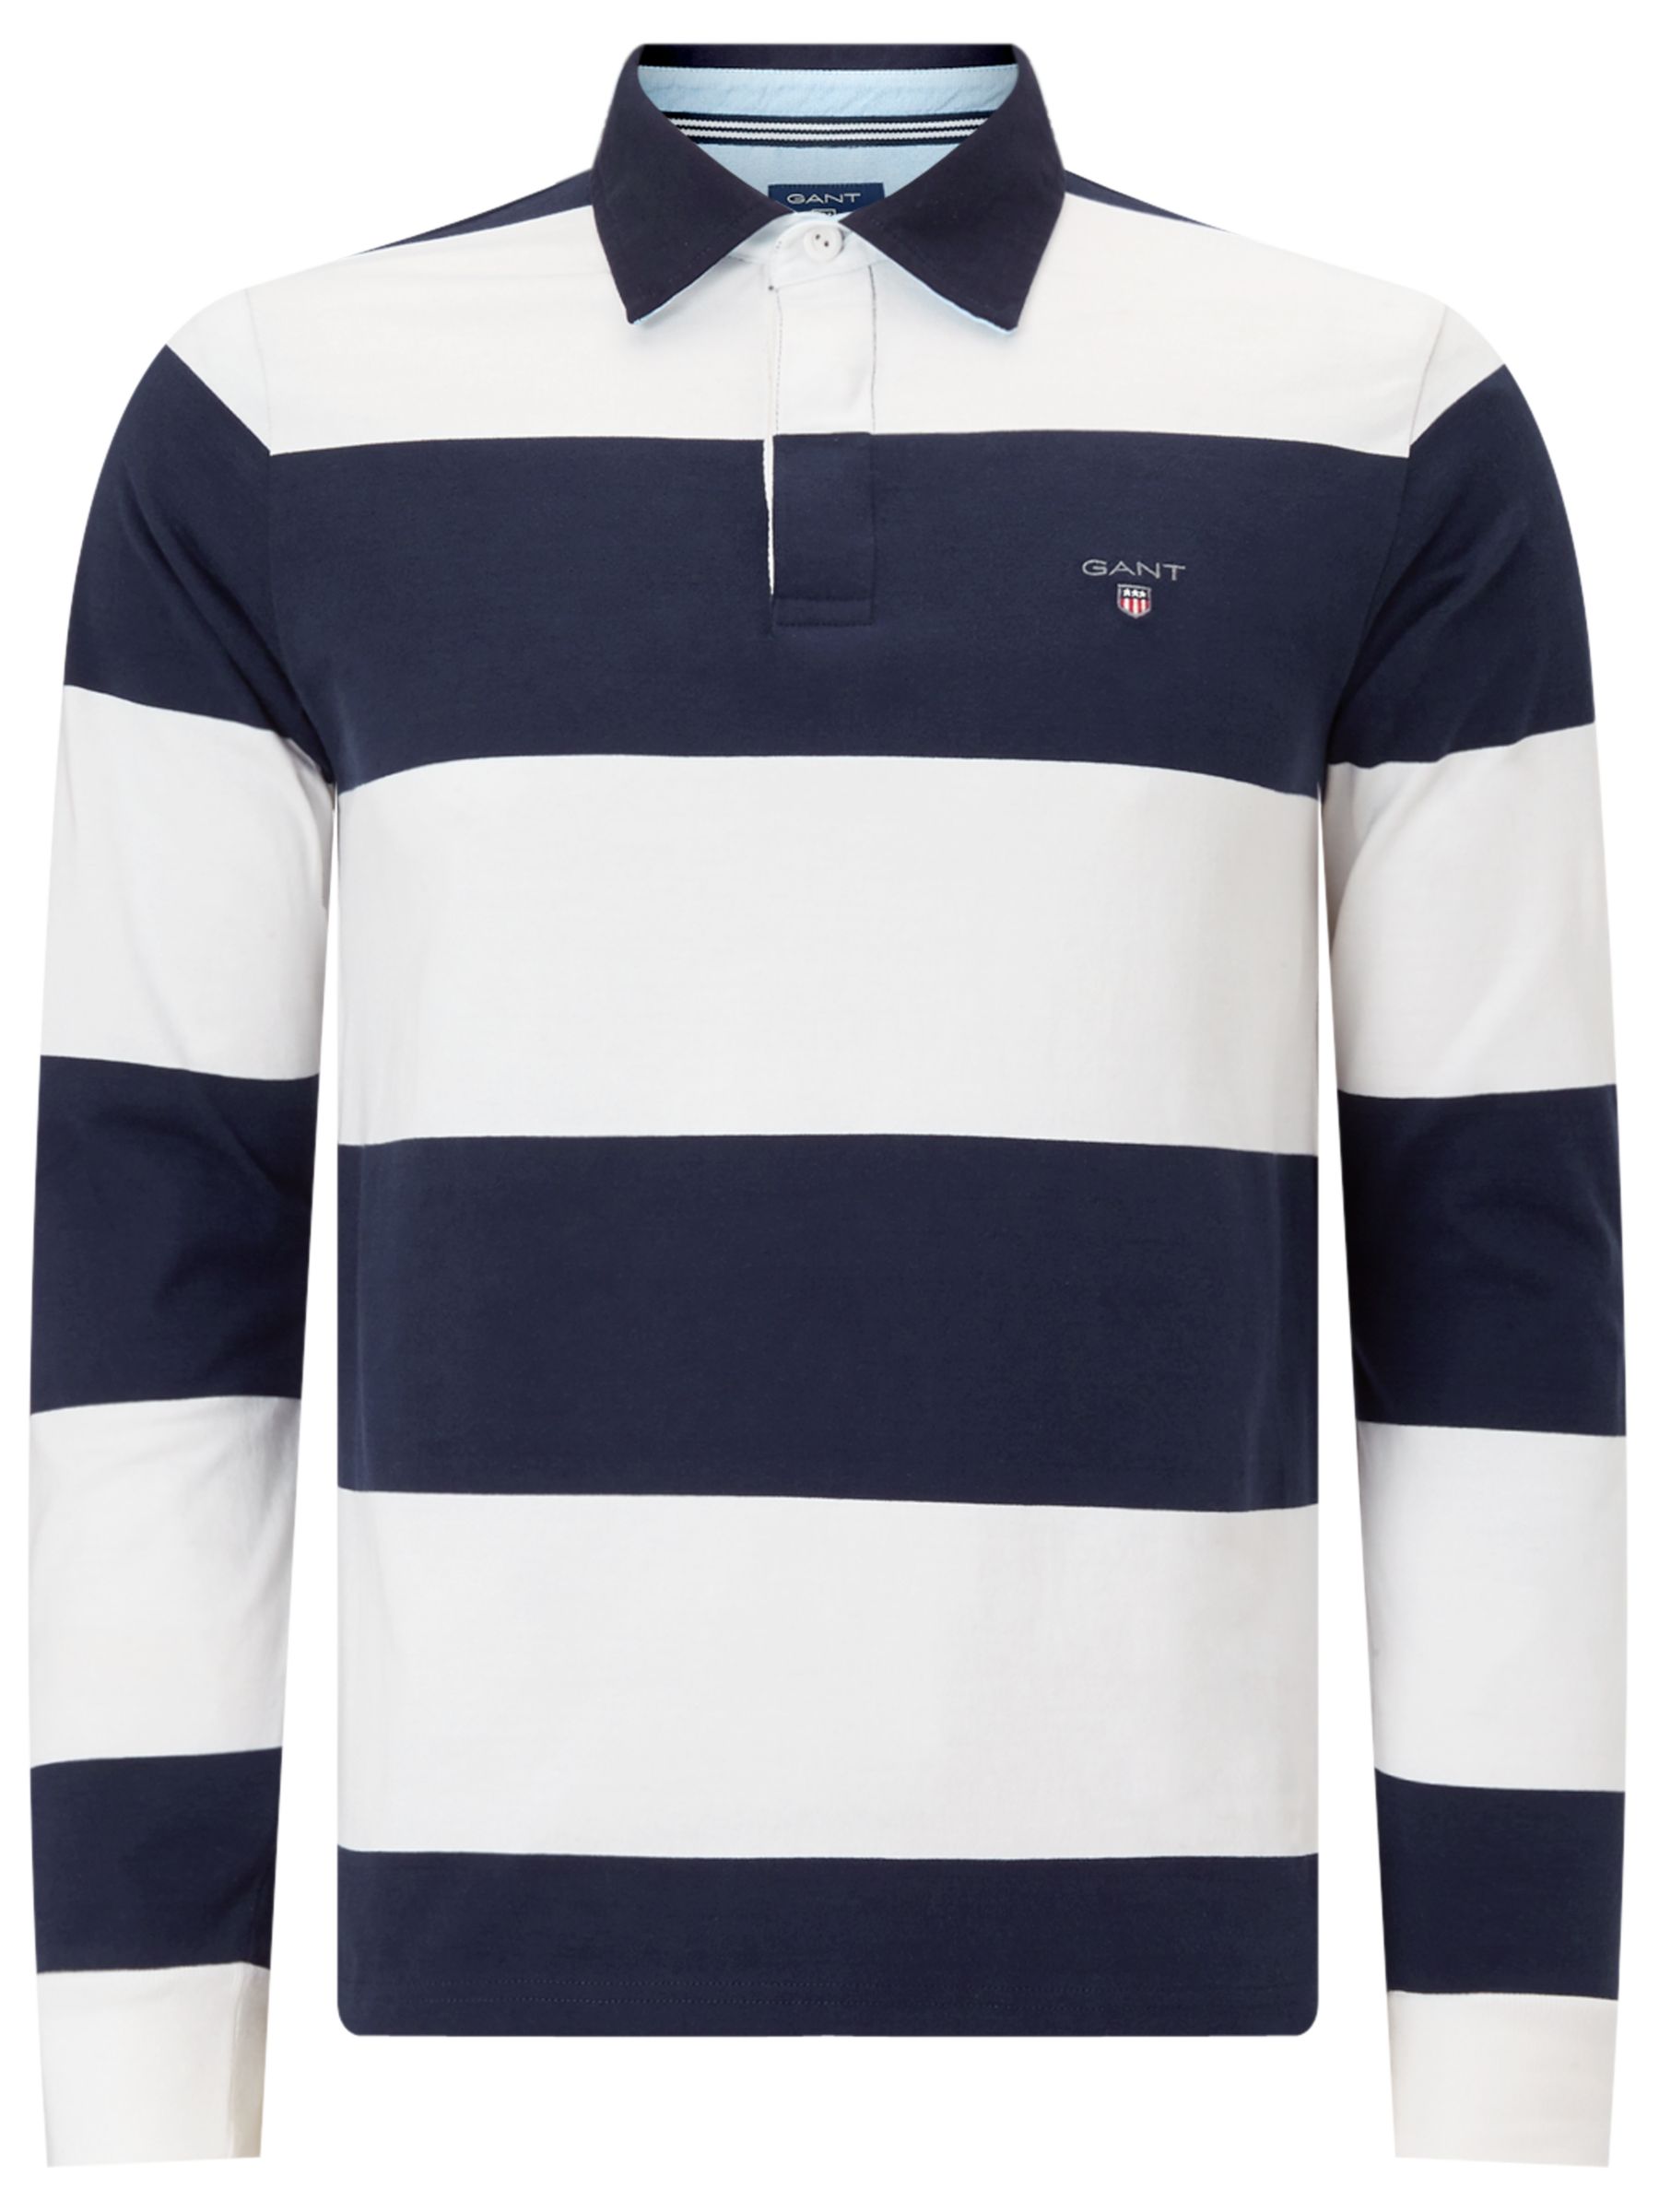 GANT Rugger Bar Stripe Heavy Jersey Rugby Shirt at John Lewis & Partners